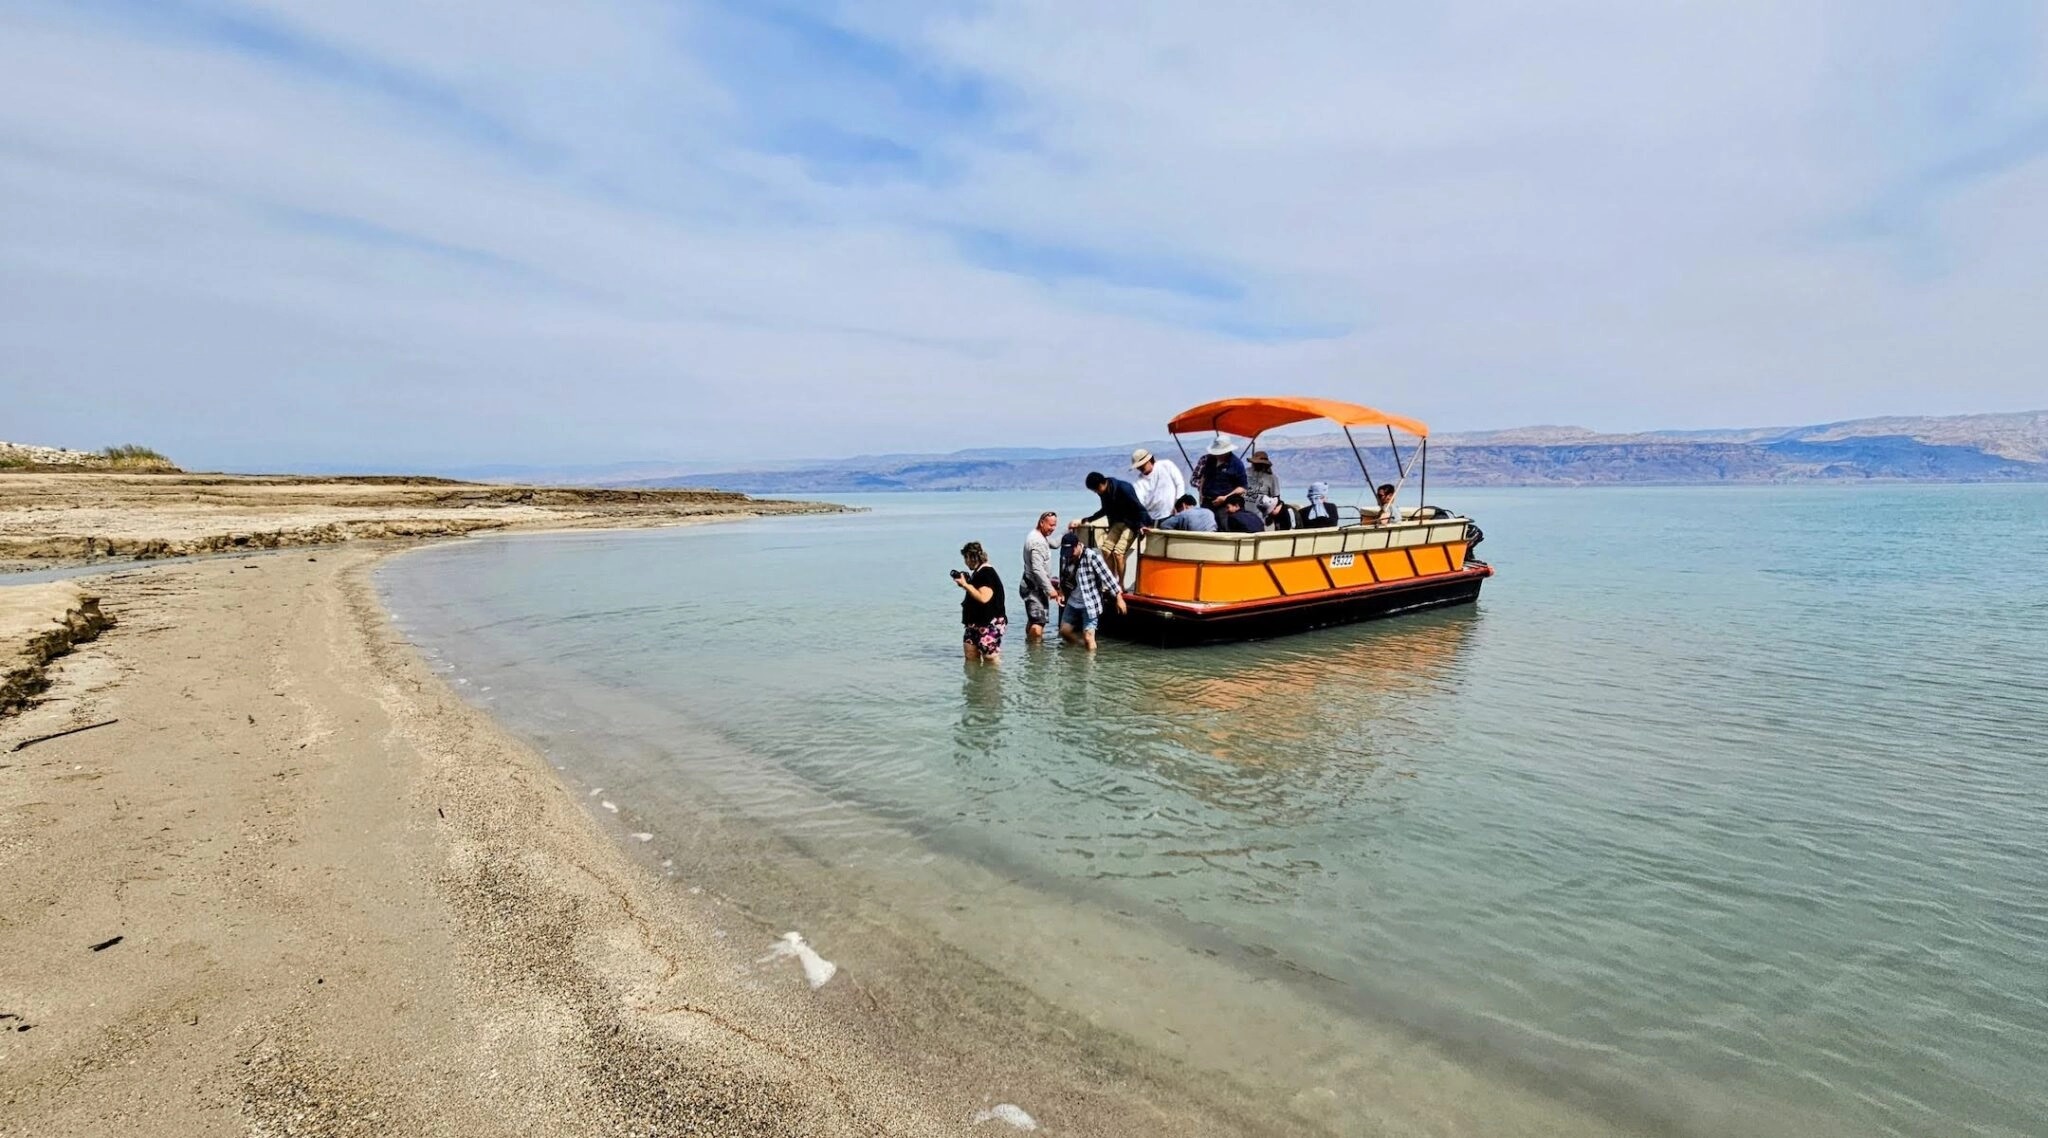 Where is the Dead Sea?